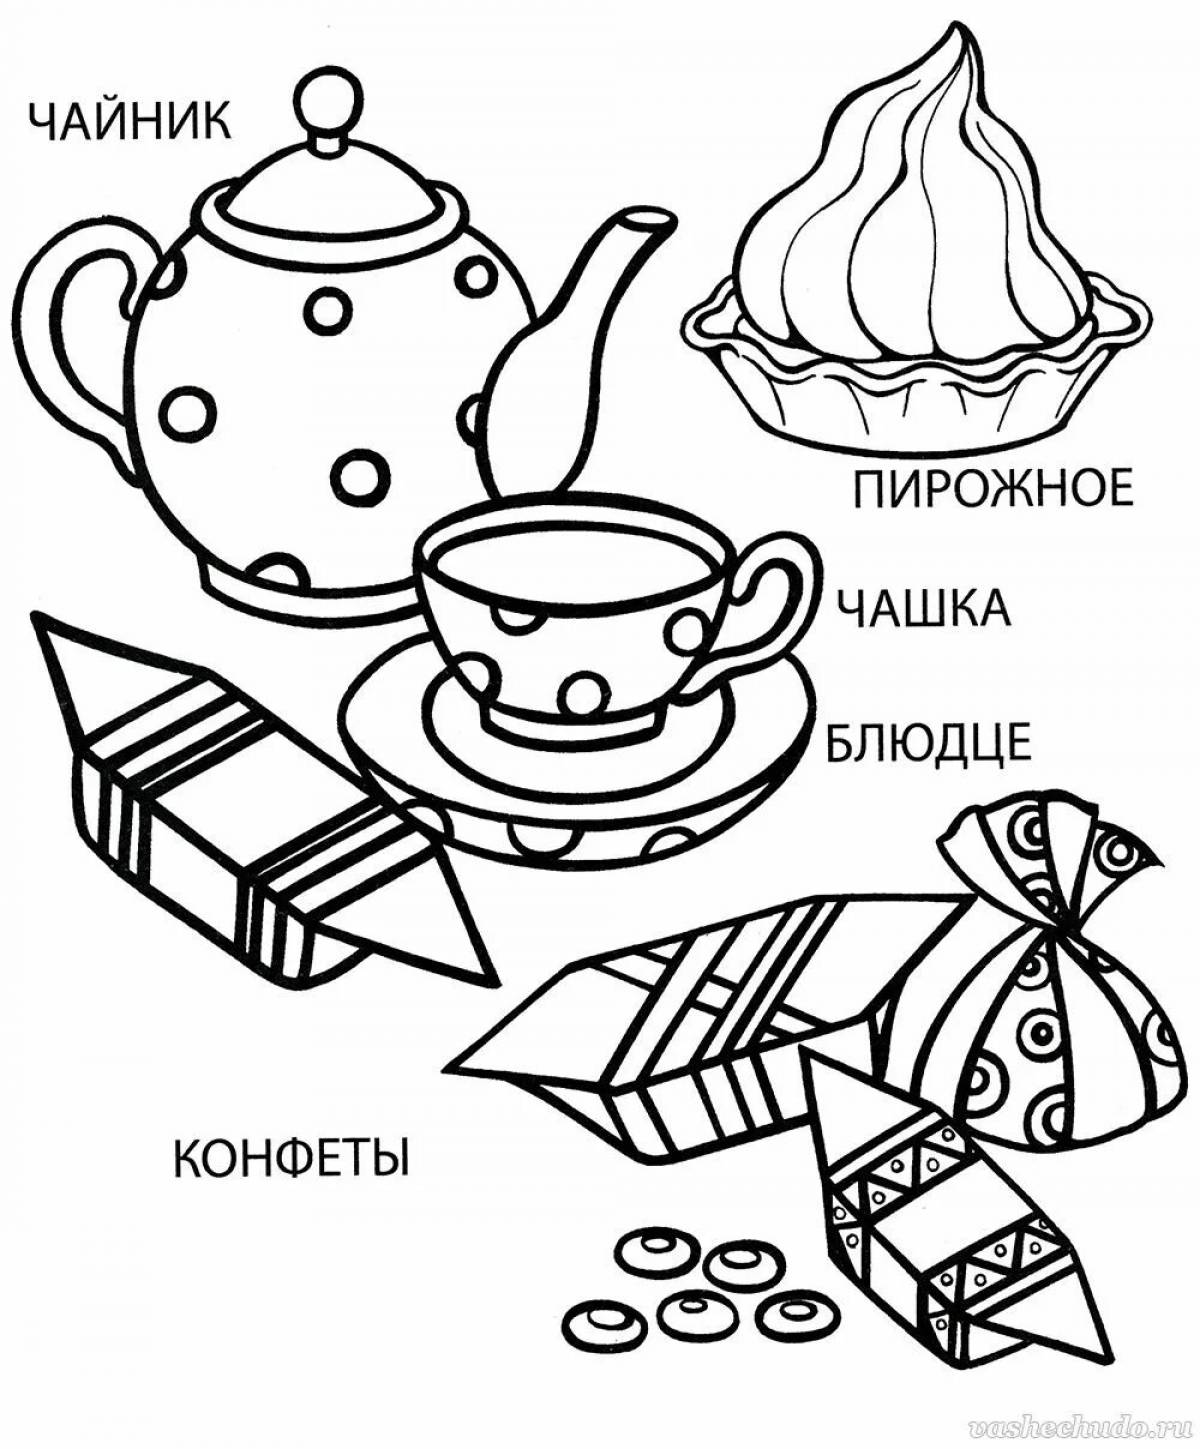 Exemplary tea utensils coloring book for kids